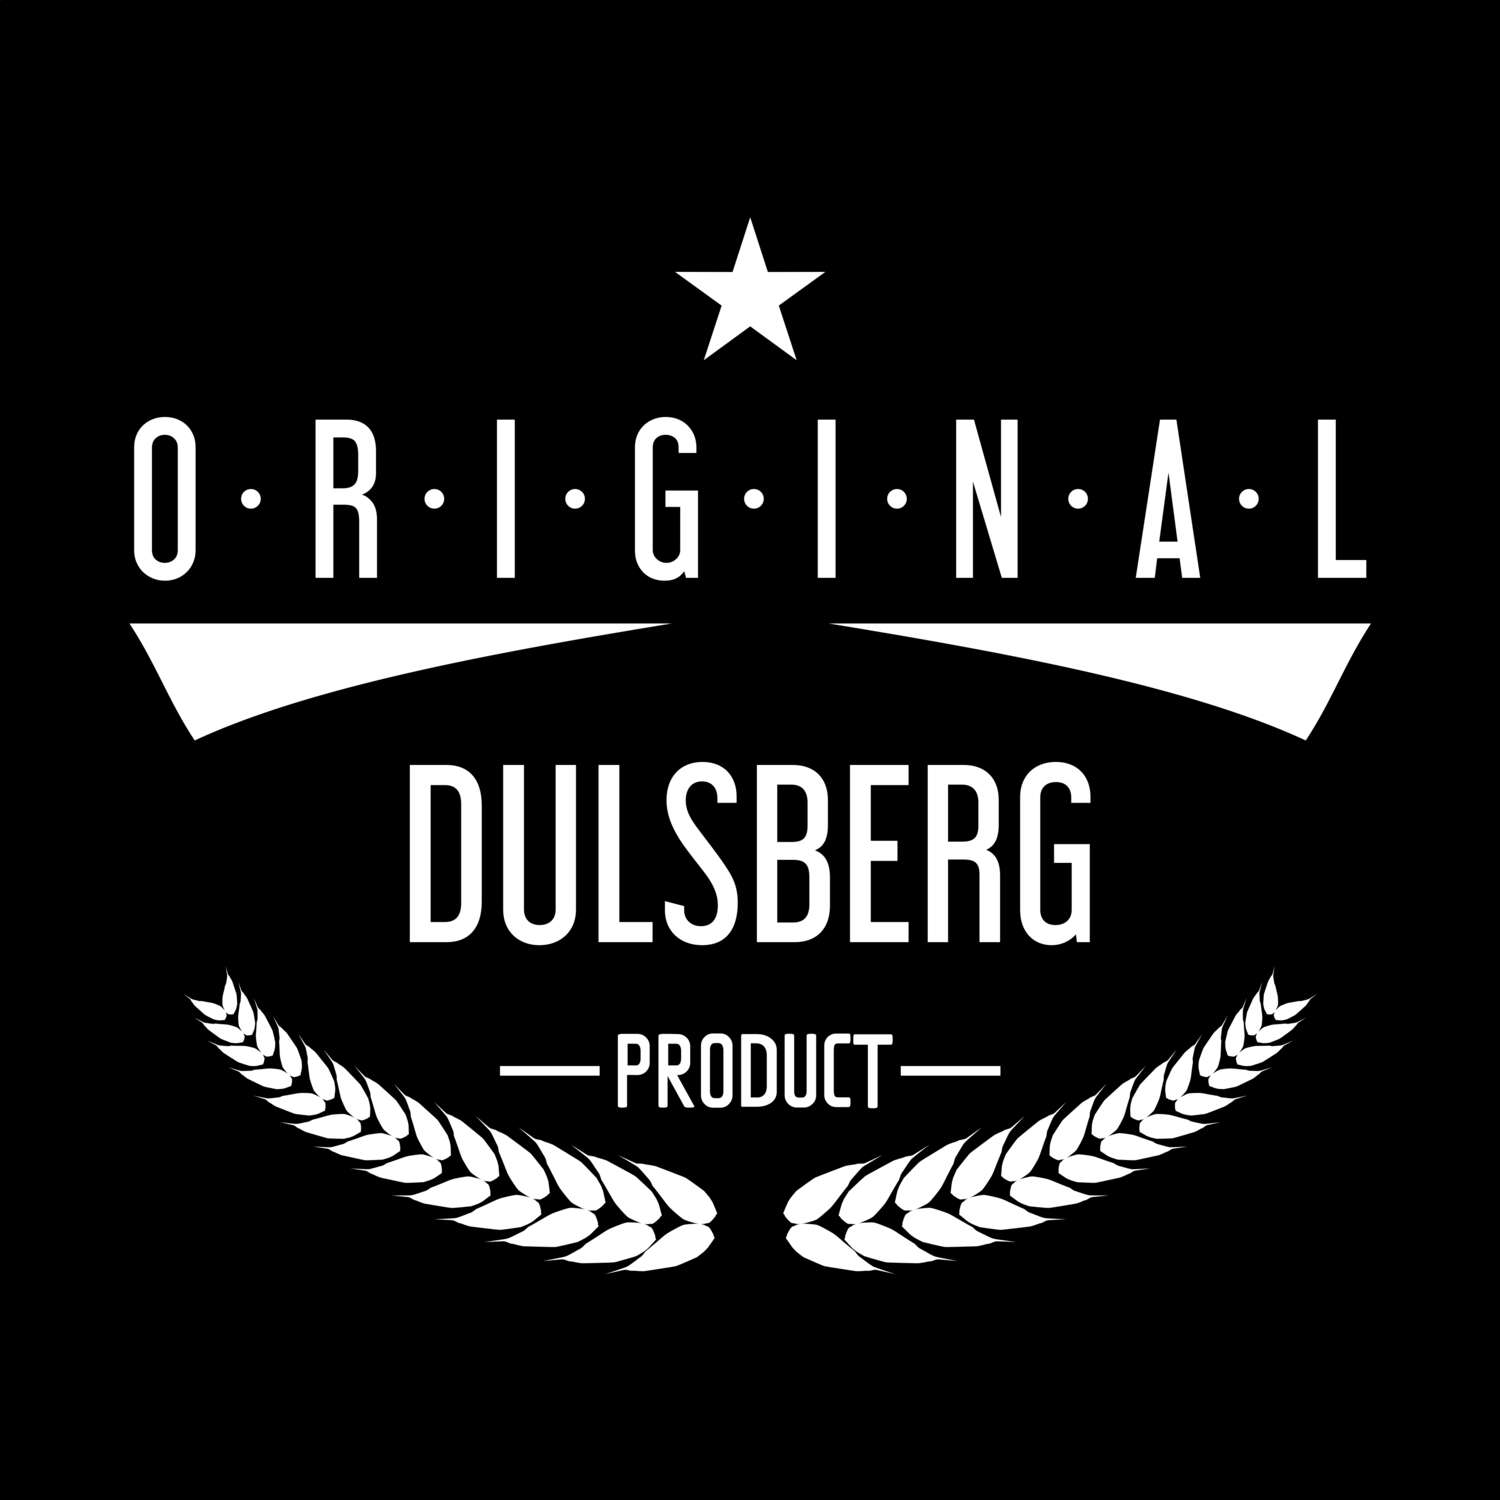 Dulsberg T-Shirt »Original Product«